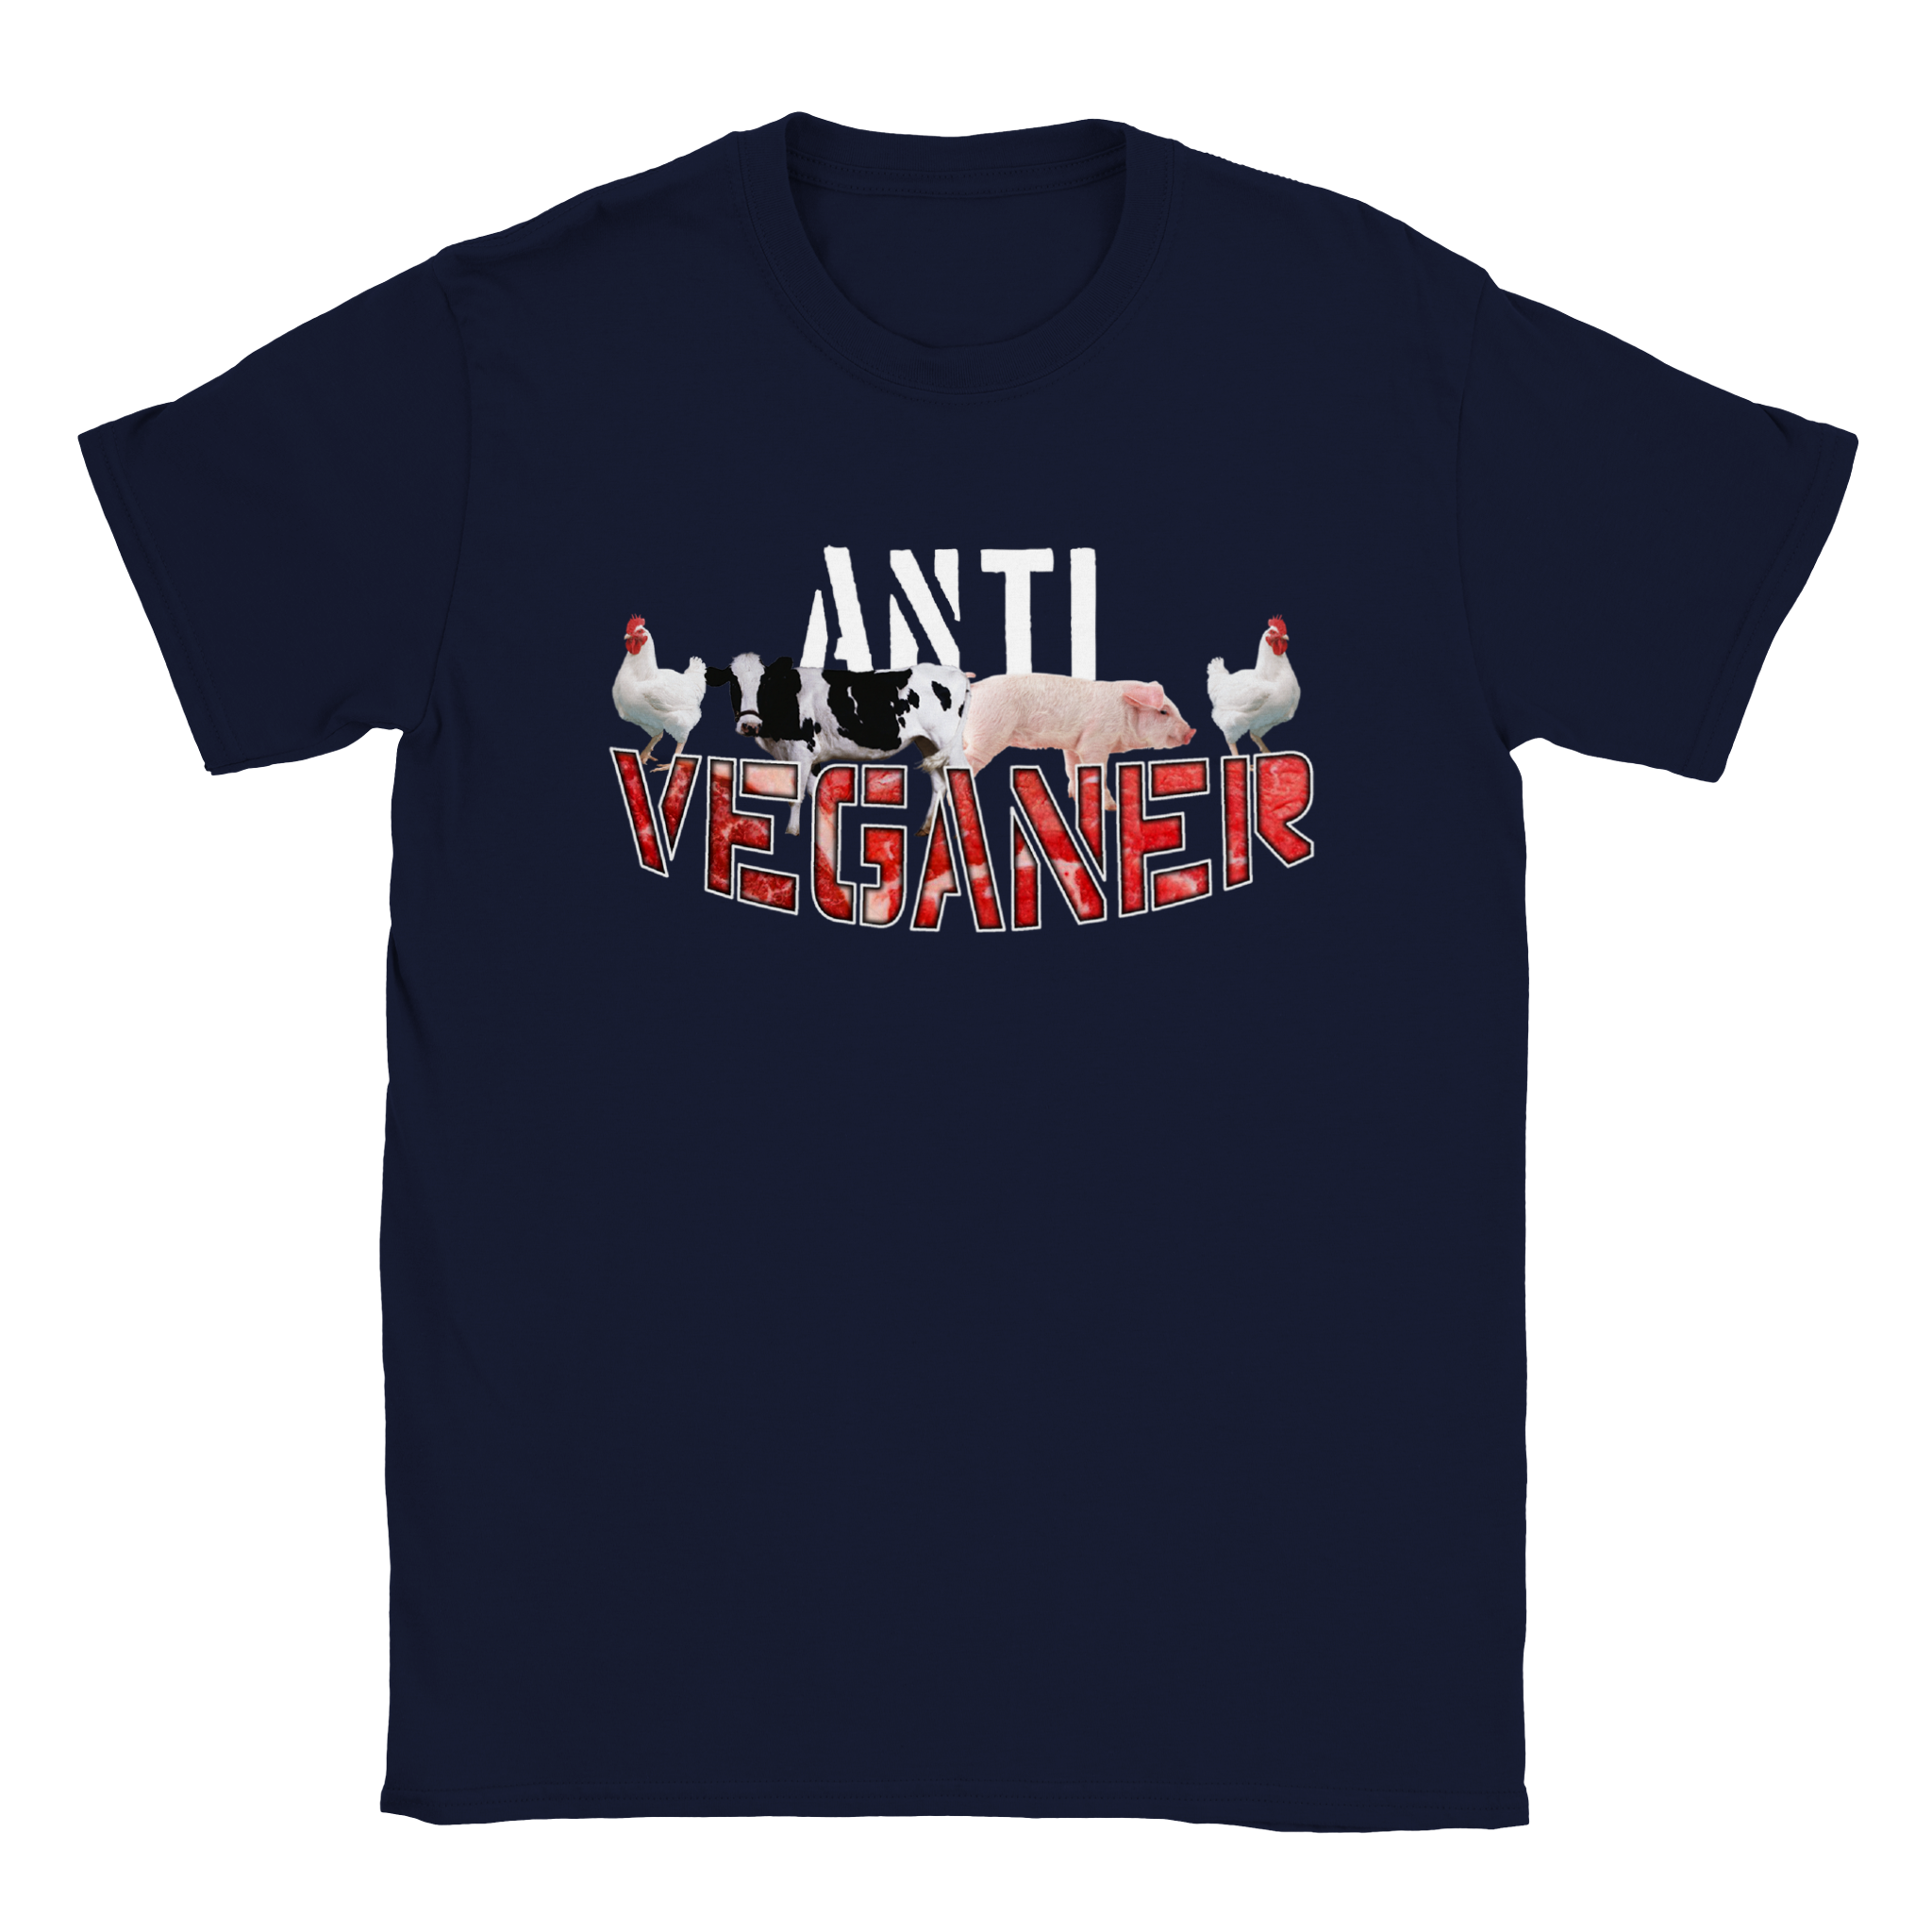 Anti Veganer shirt navy blue